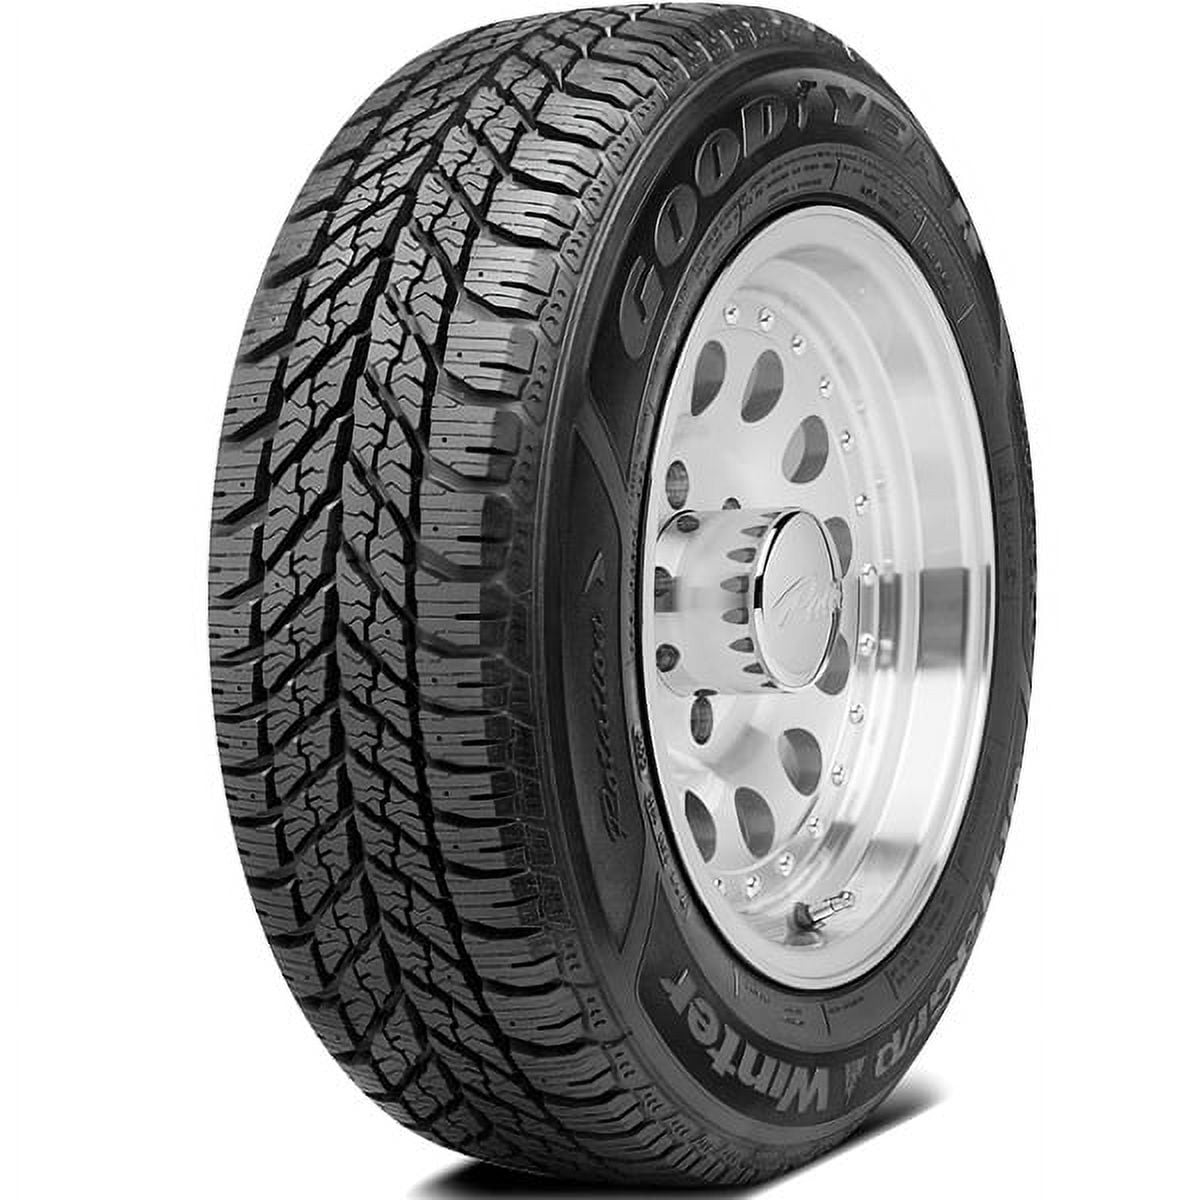 Goodyear Ultra Grip Winter 175/65R14 82 T Tire